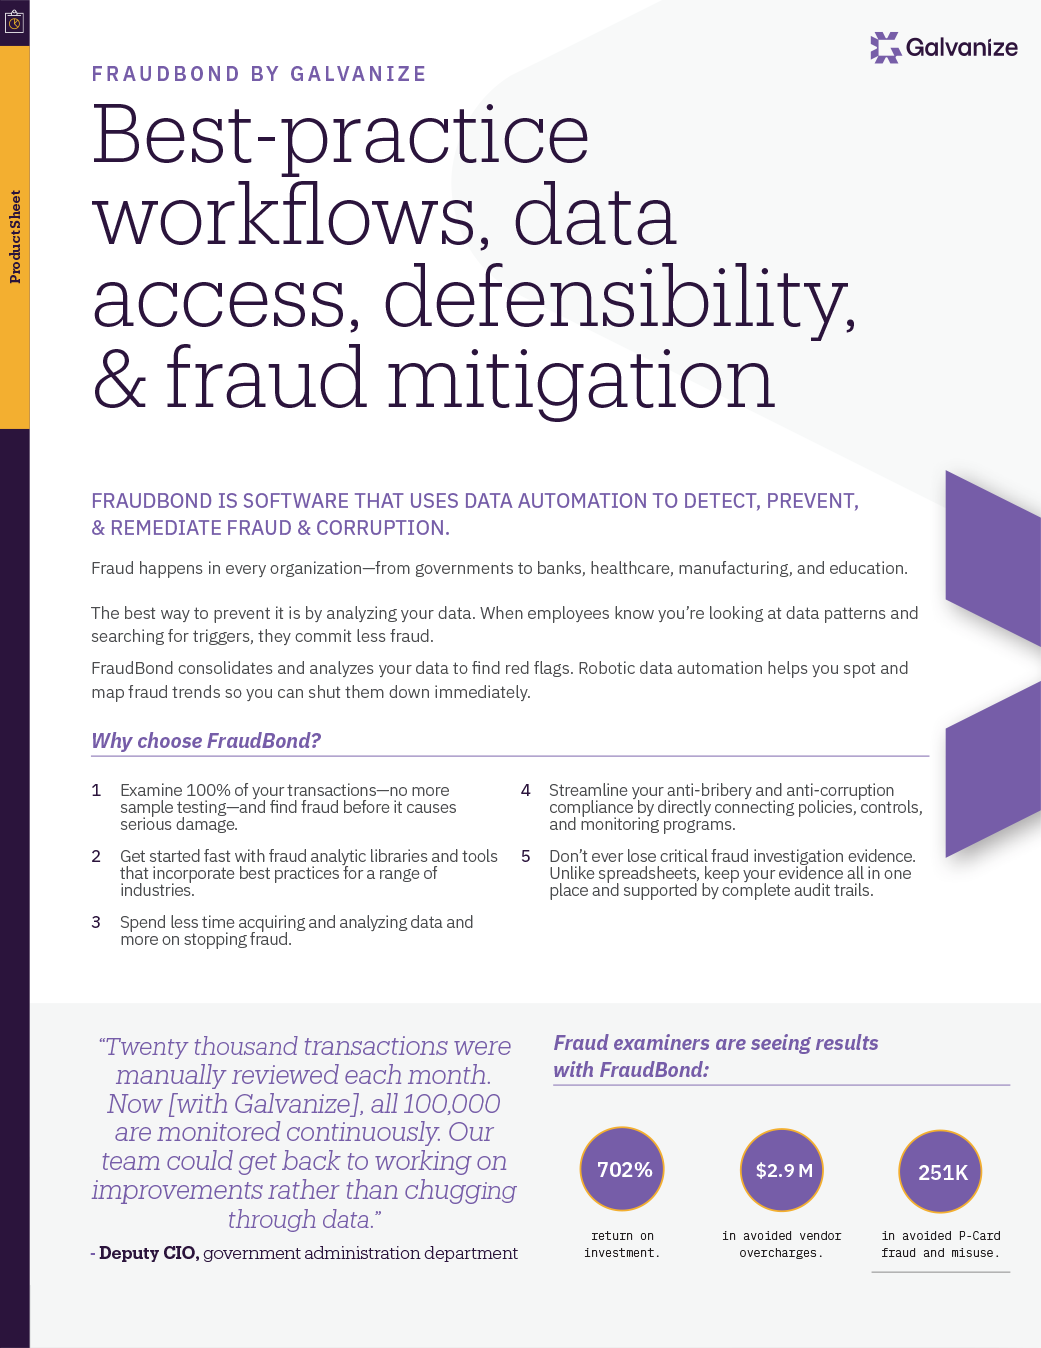 Best-practice workflows, data access, defensibility, & fraud mitigation